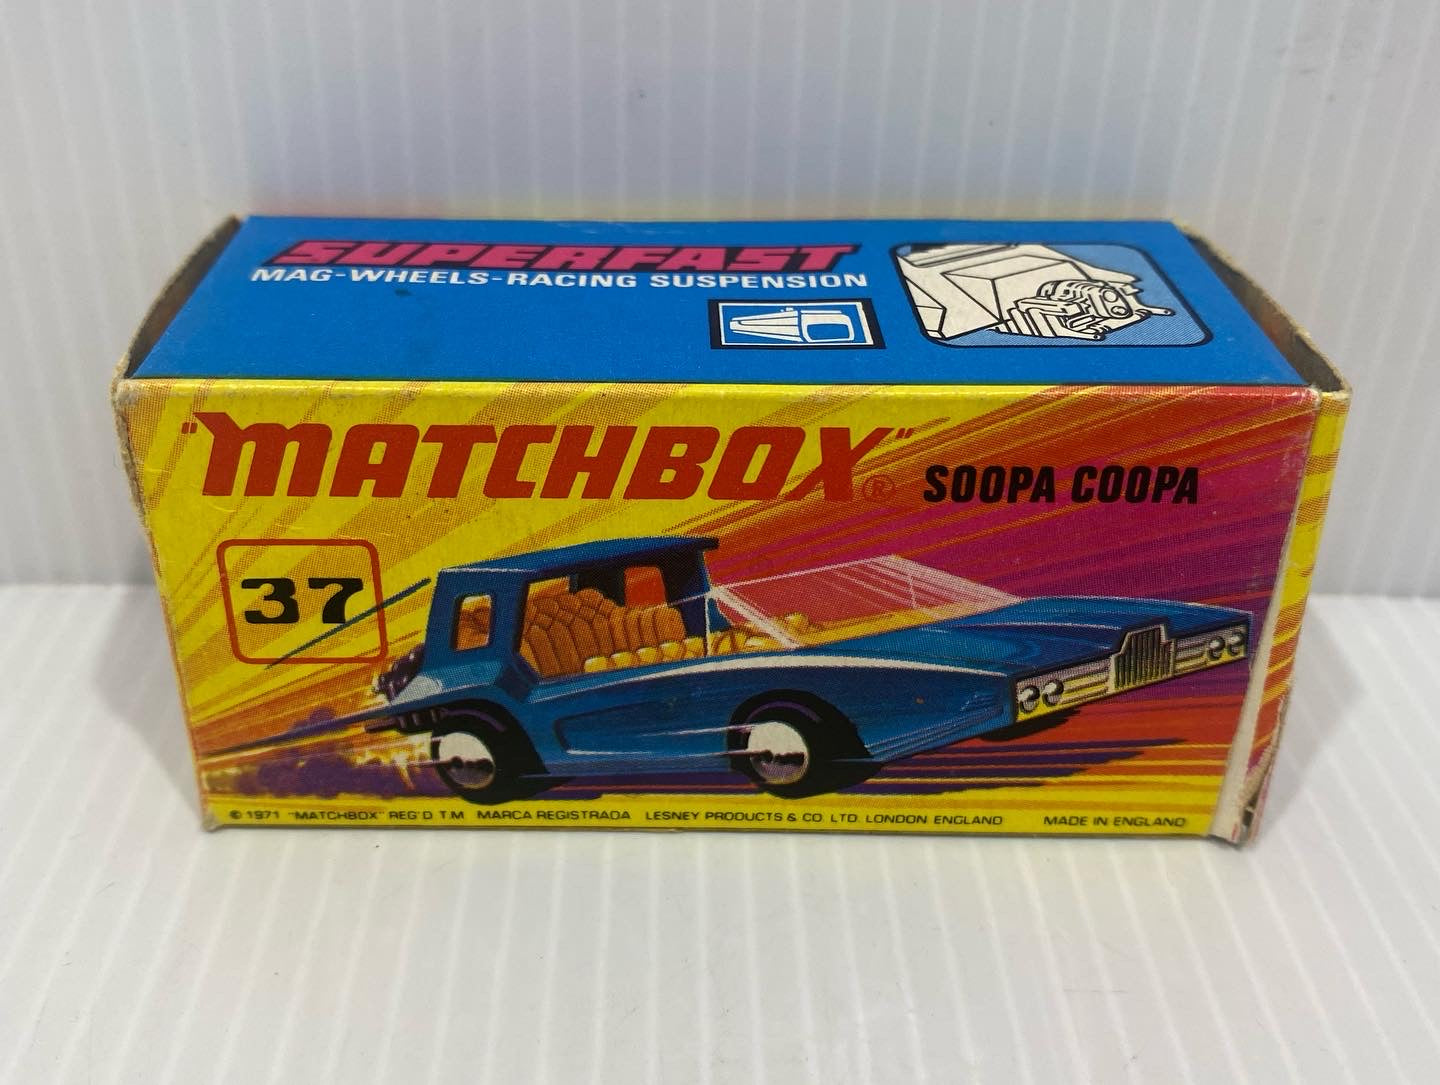 Soopa Coopa - Matchbox MB37 1973-1976. With original box